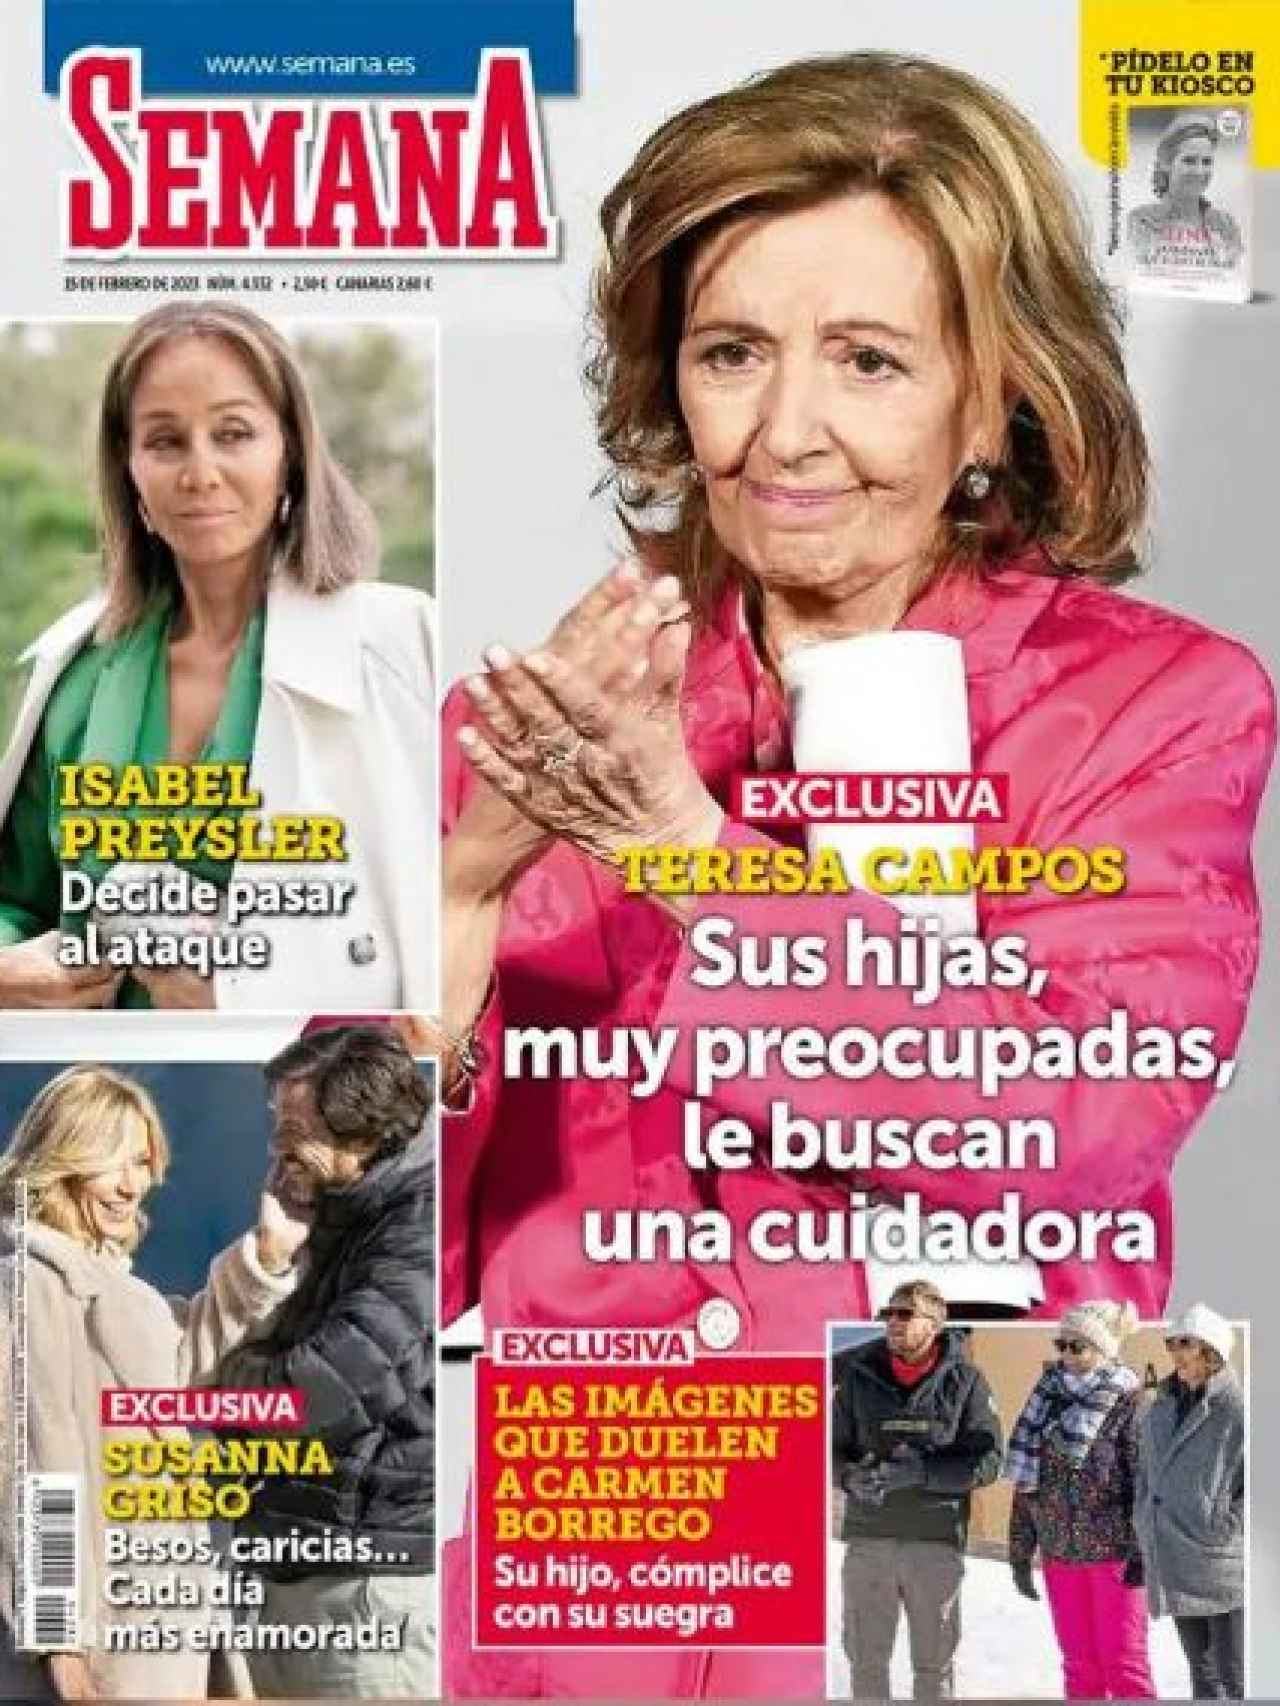 La portada de 'Semana', informando sobre la cuidadora de Teresa Campos, este miércoles 8 de febrero.